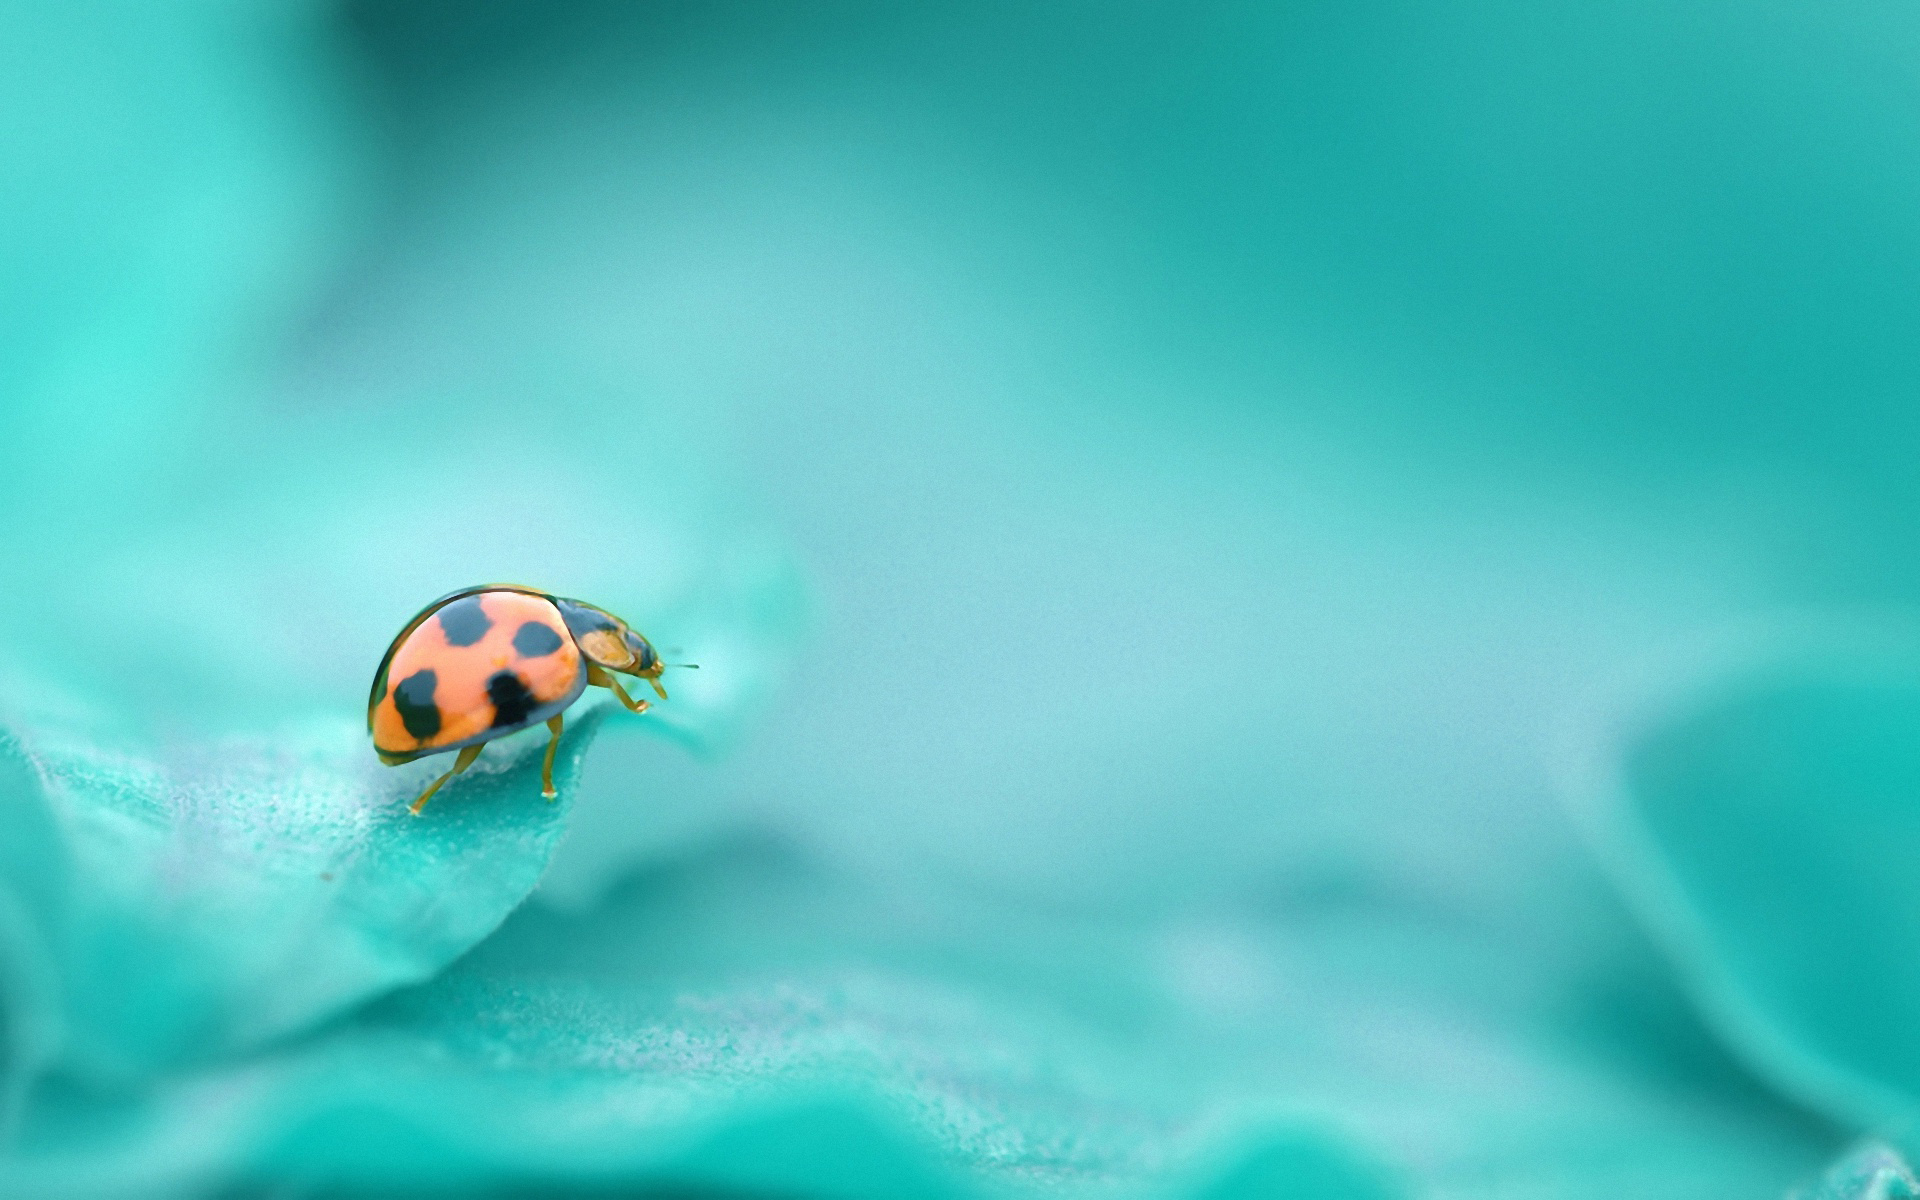 Download 41+ Cute Ladybug Wallpaper on WallpaperSafari